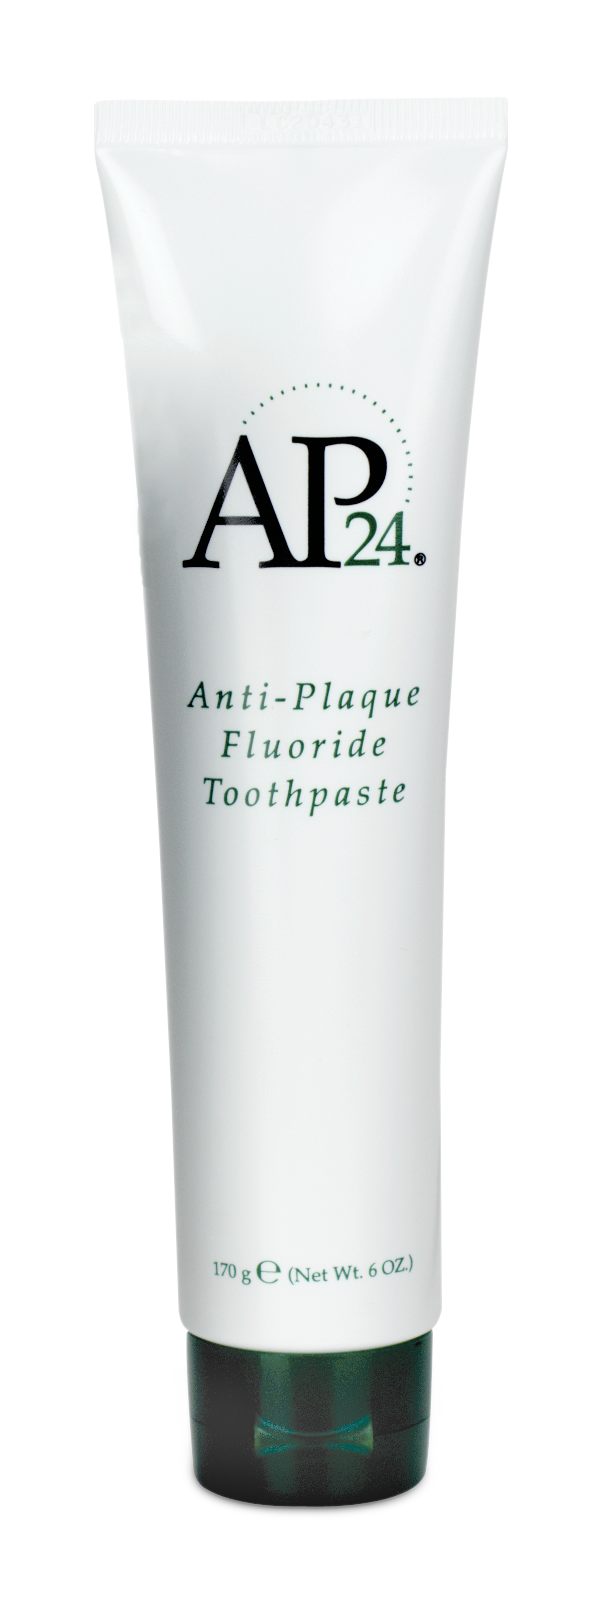 AP 24 Anti-Plaque Fluoride Toothpaste